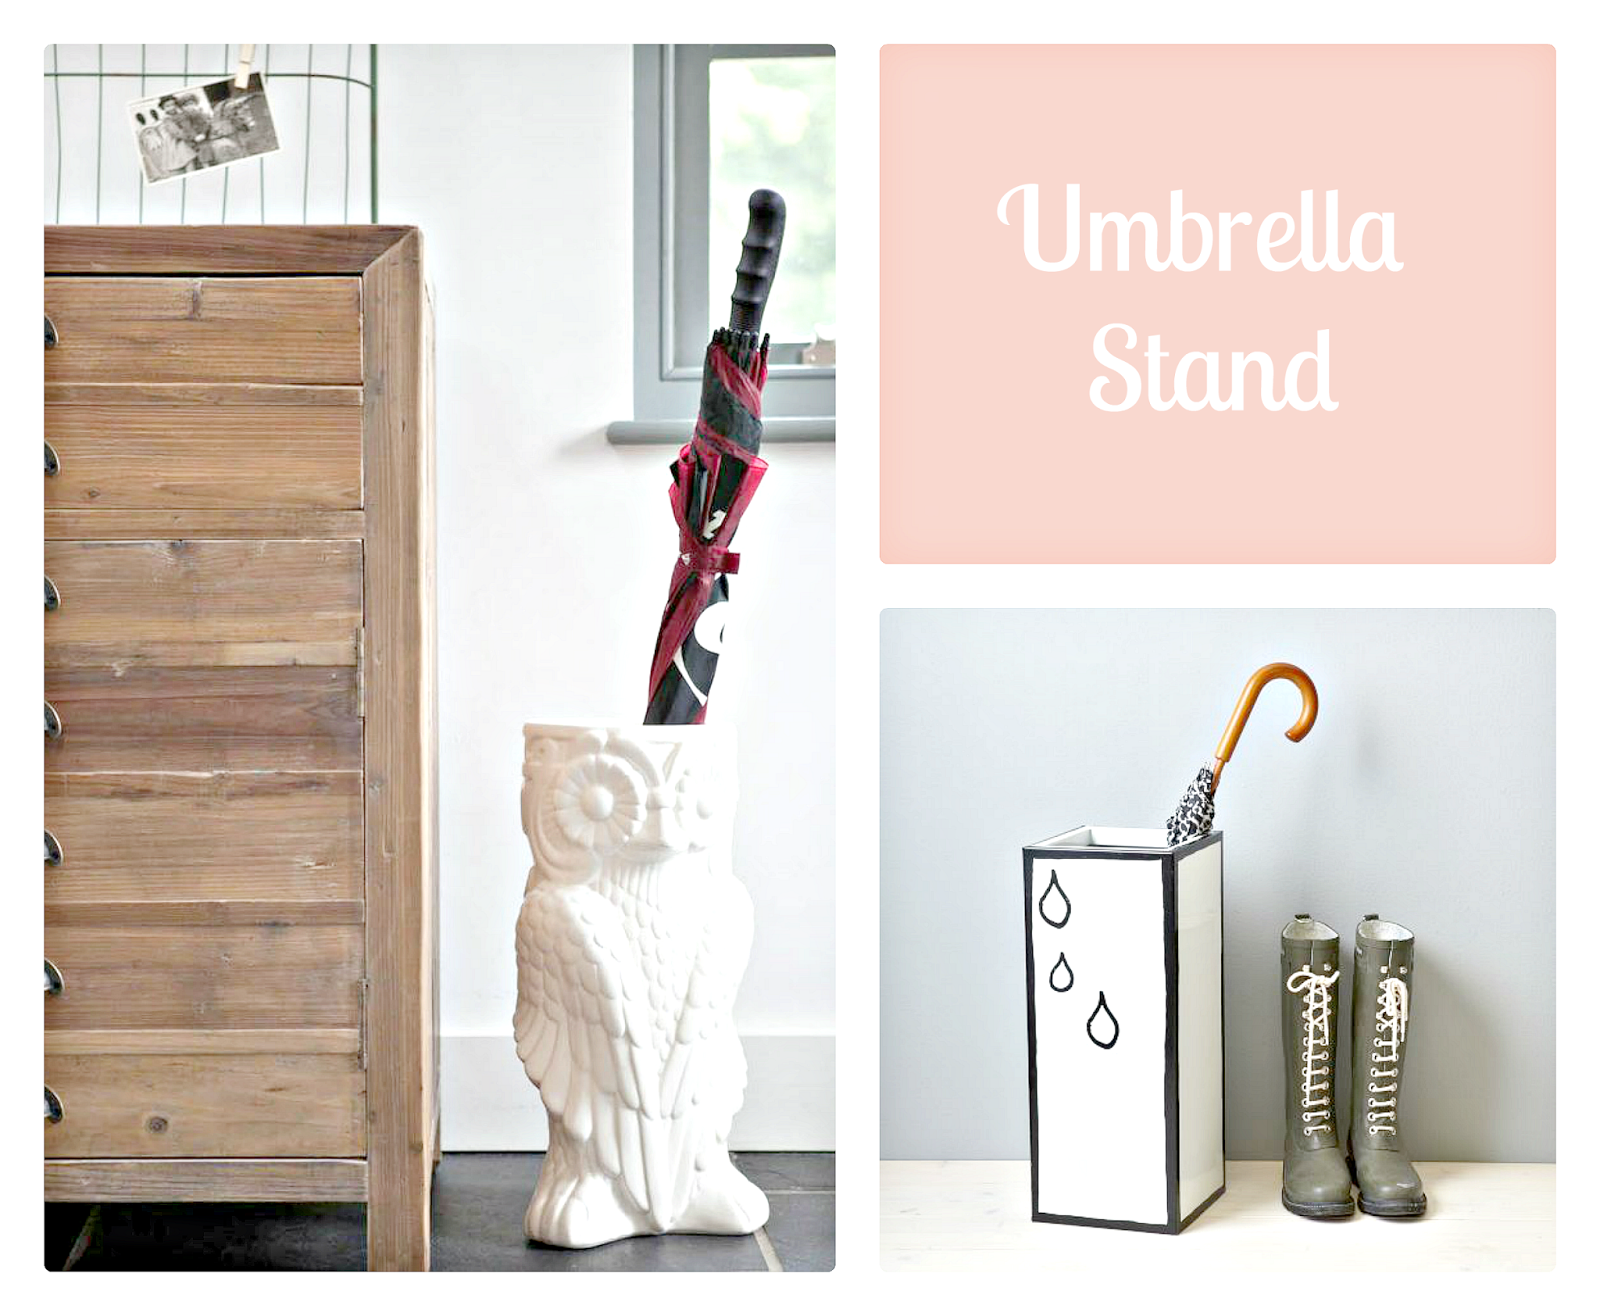 umbrella stand